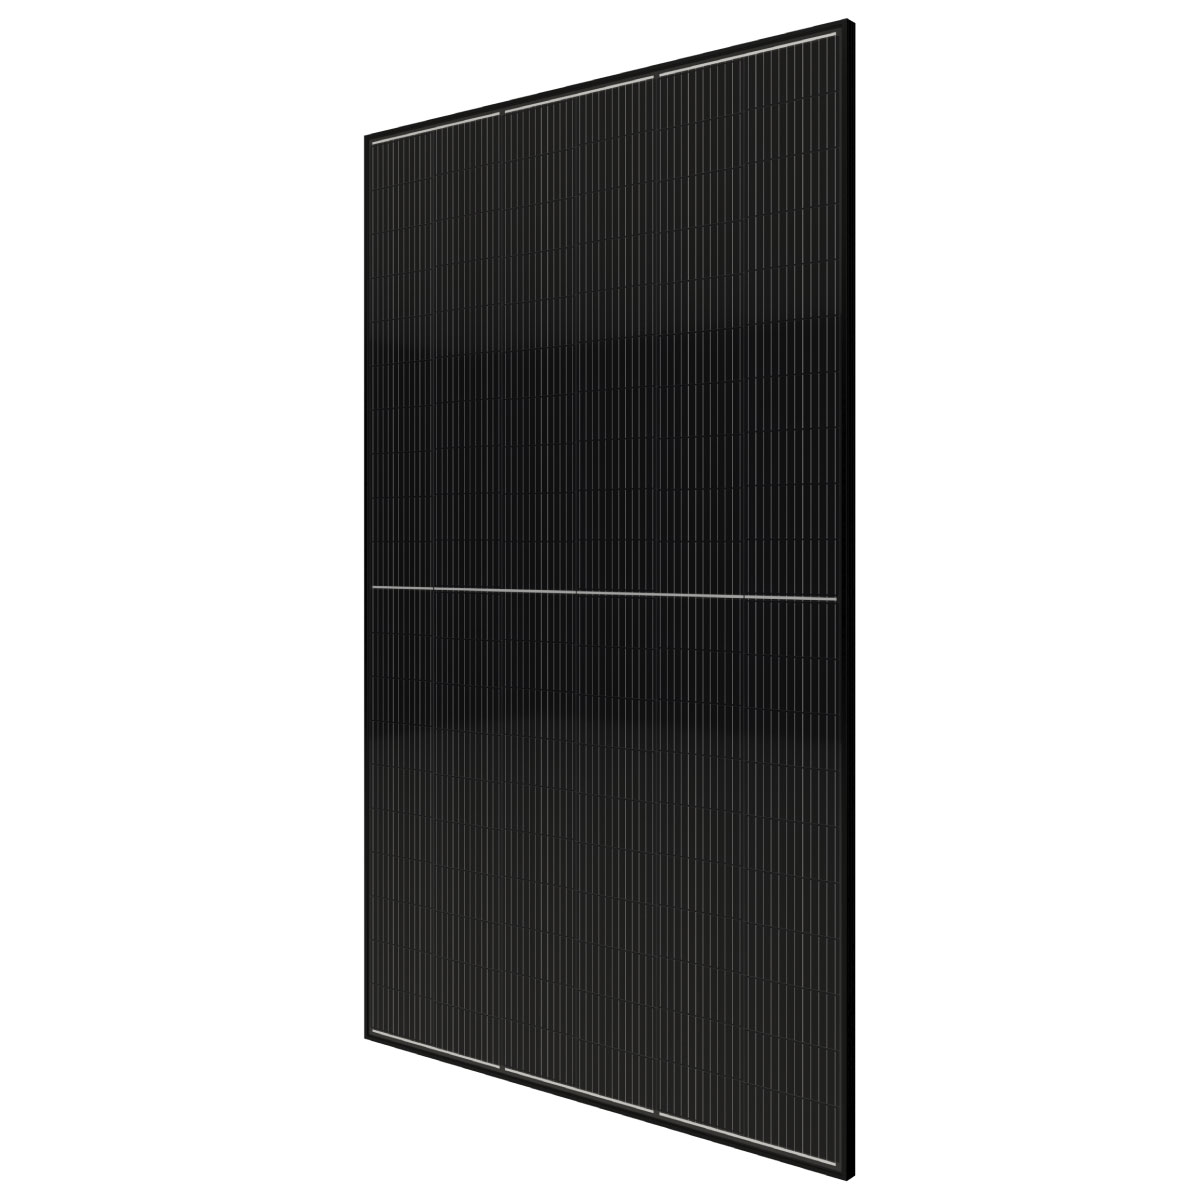 TommaTech 610Wp 120PM M12 Full Black Solar Panel